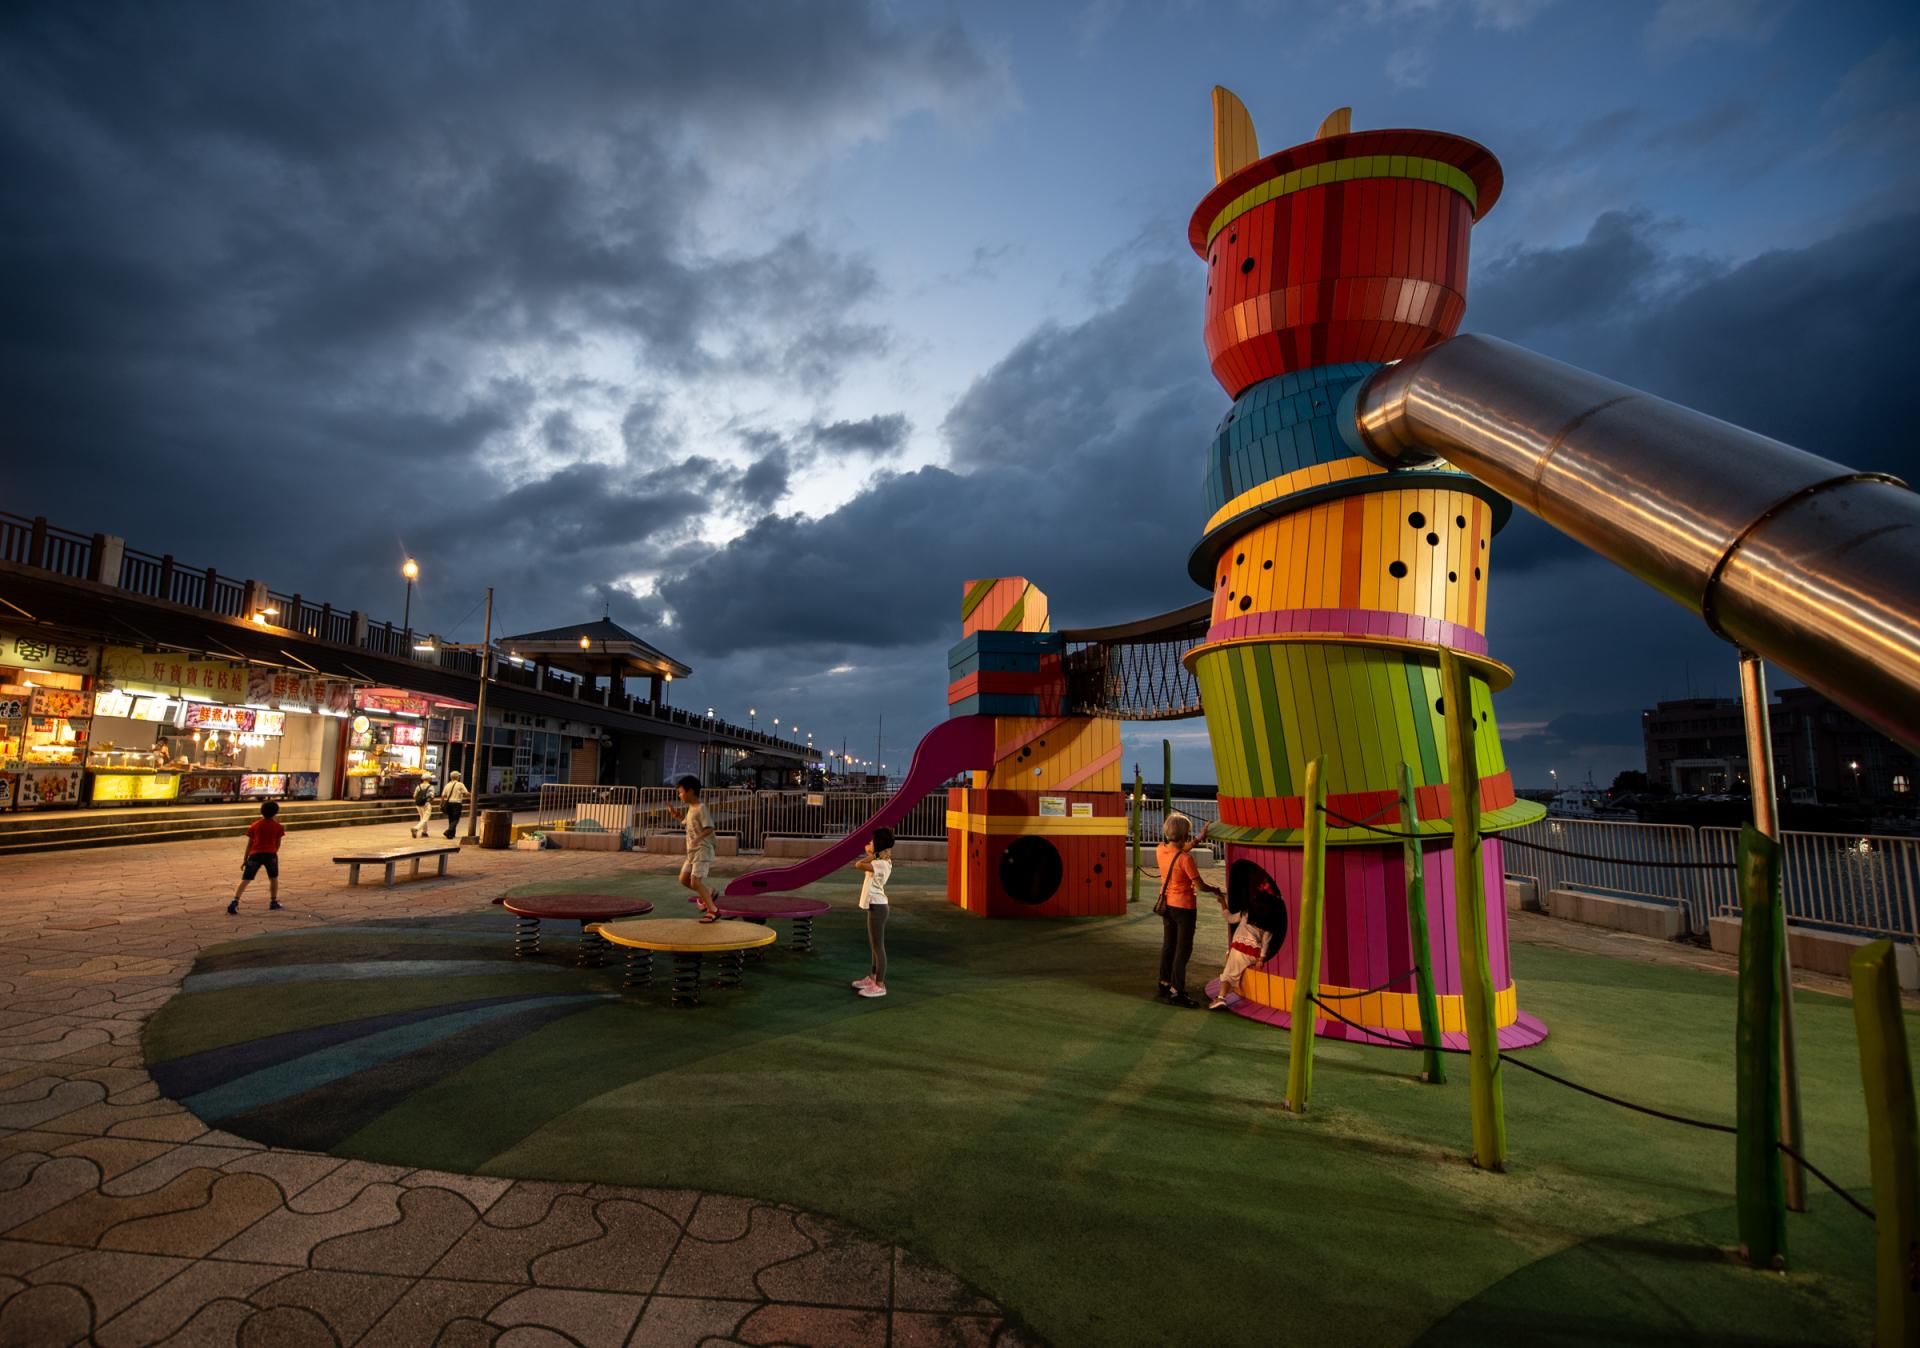 Night shot of colourful playground